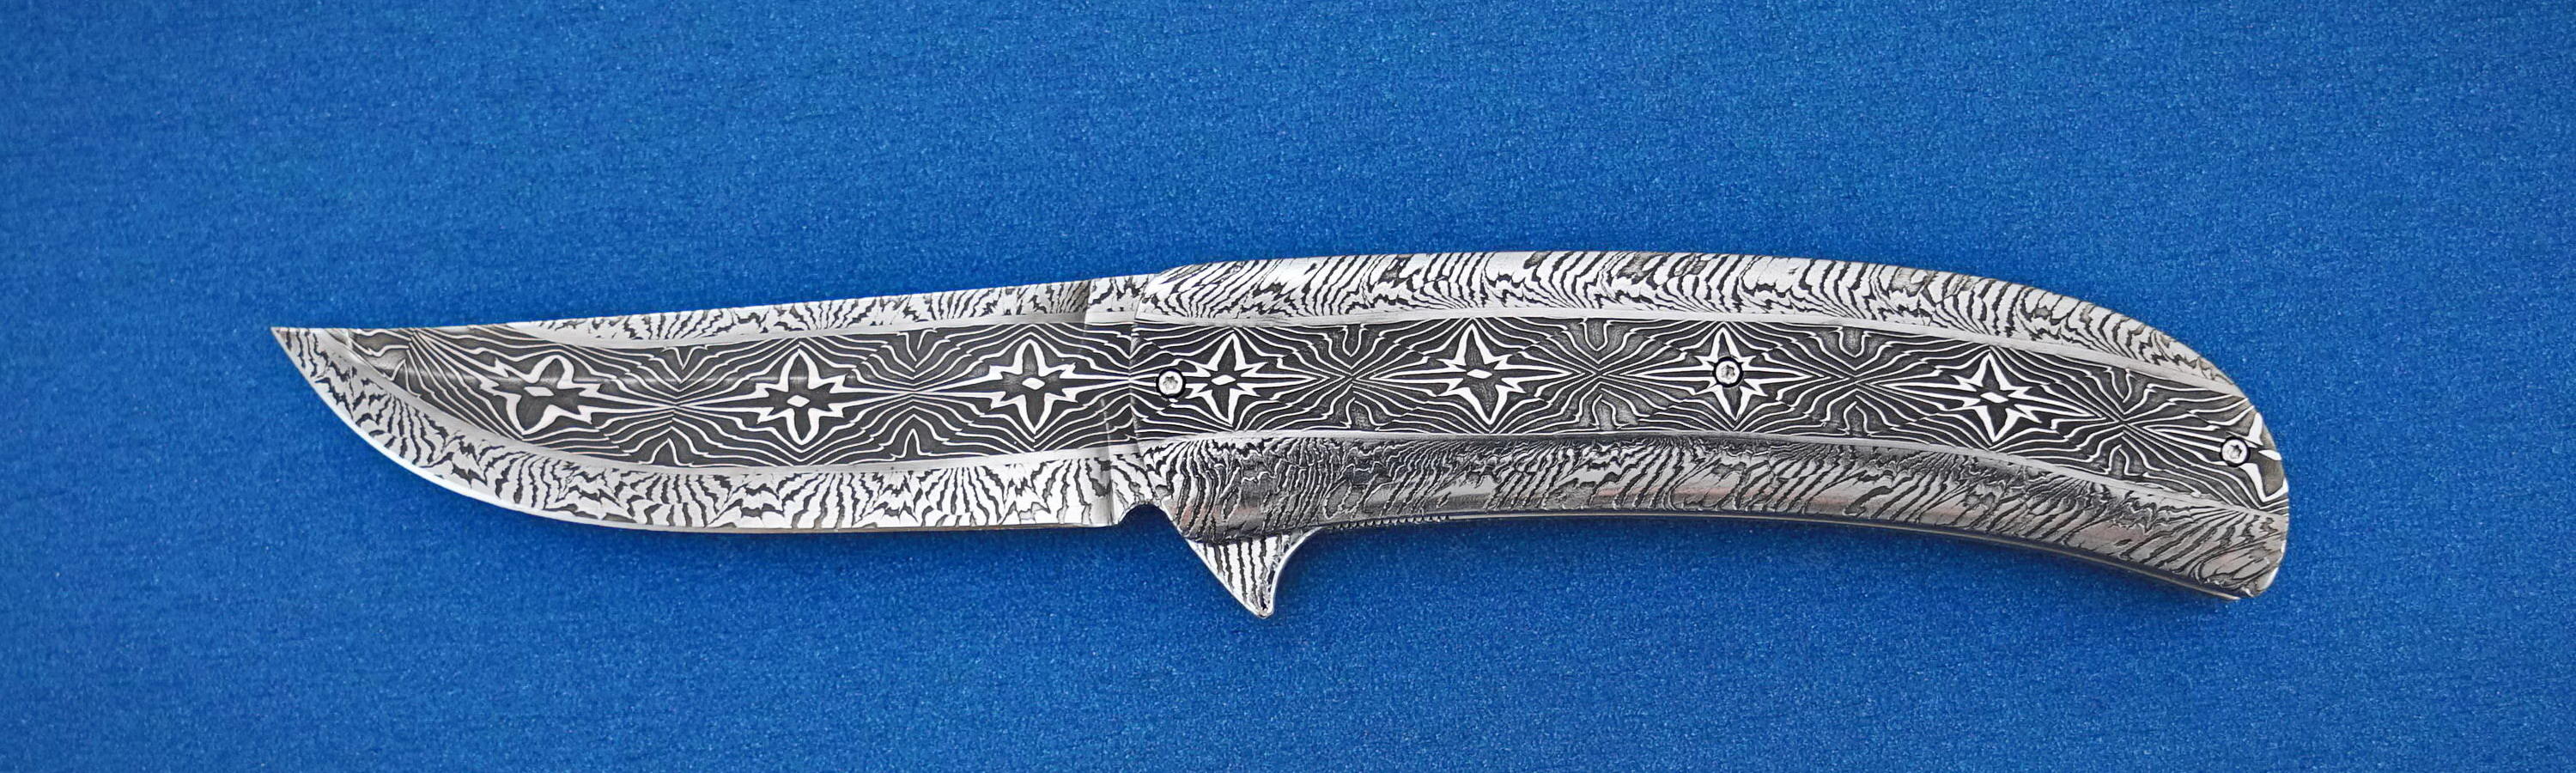 Mosaic damascus knife Star of Persia